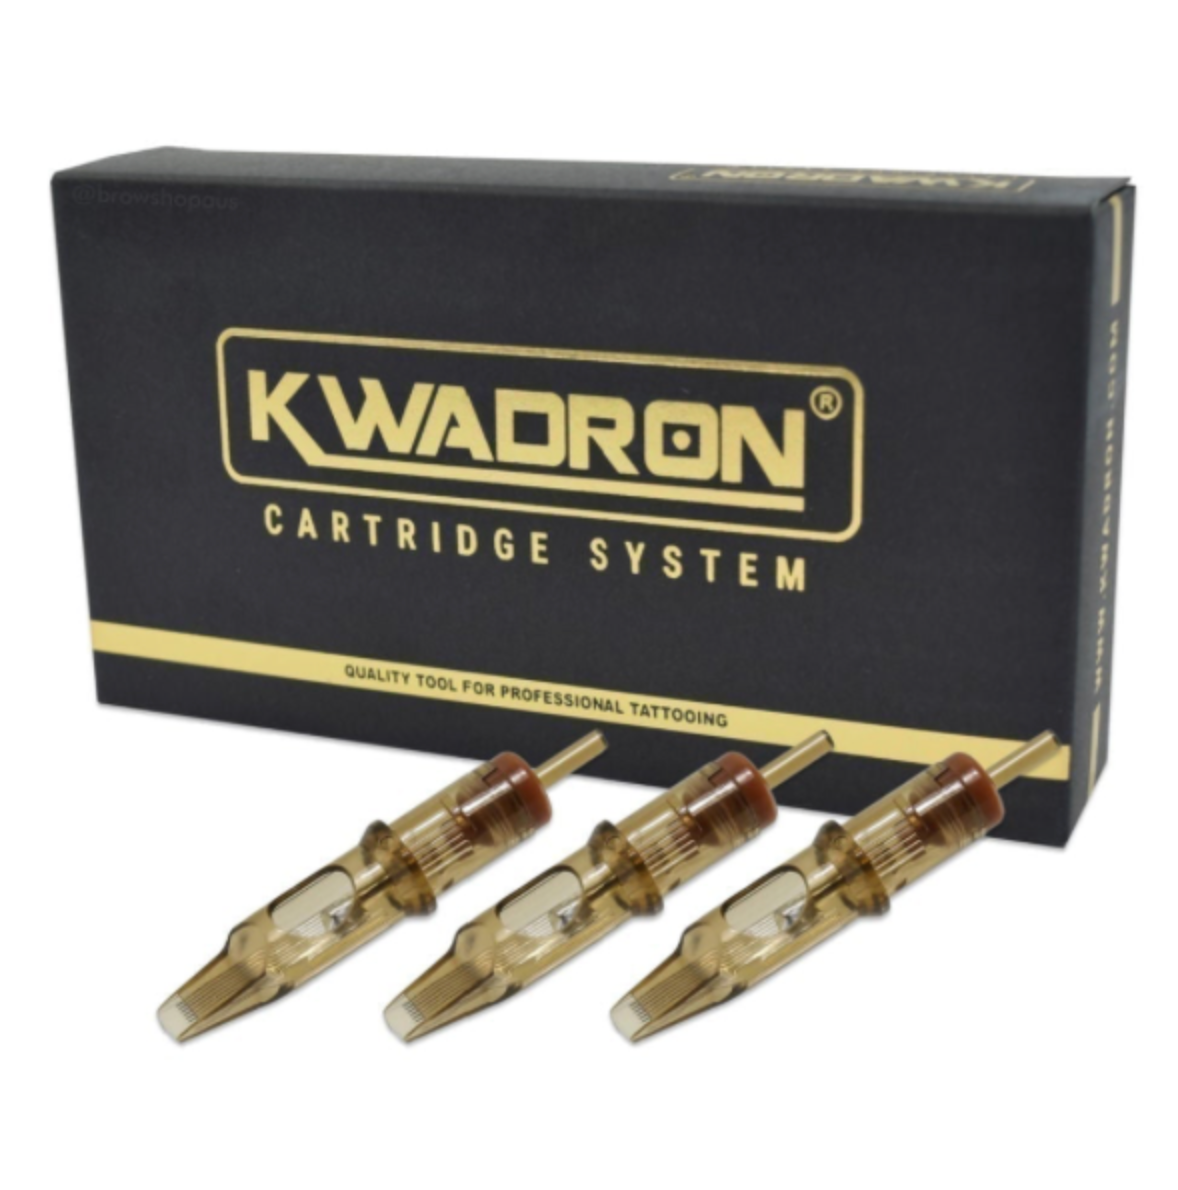 Kwadron Cartridge Needles - 7 Tight Liner Long Taper - 30/7RLLT